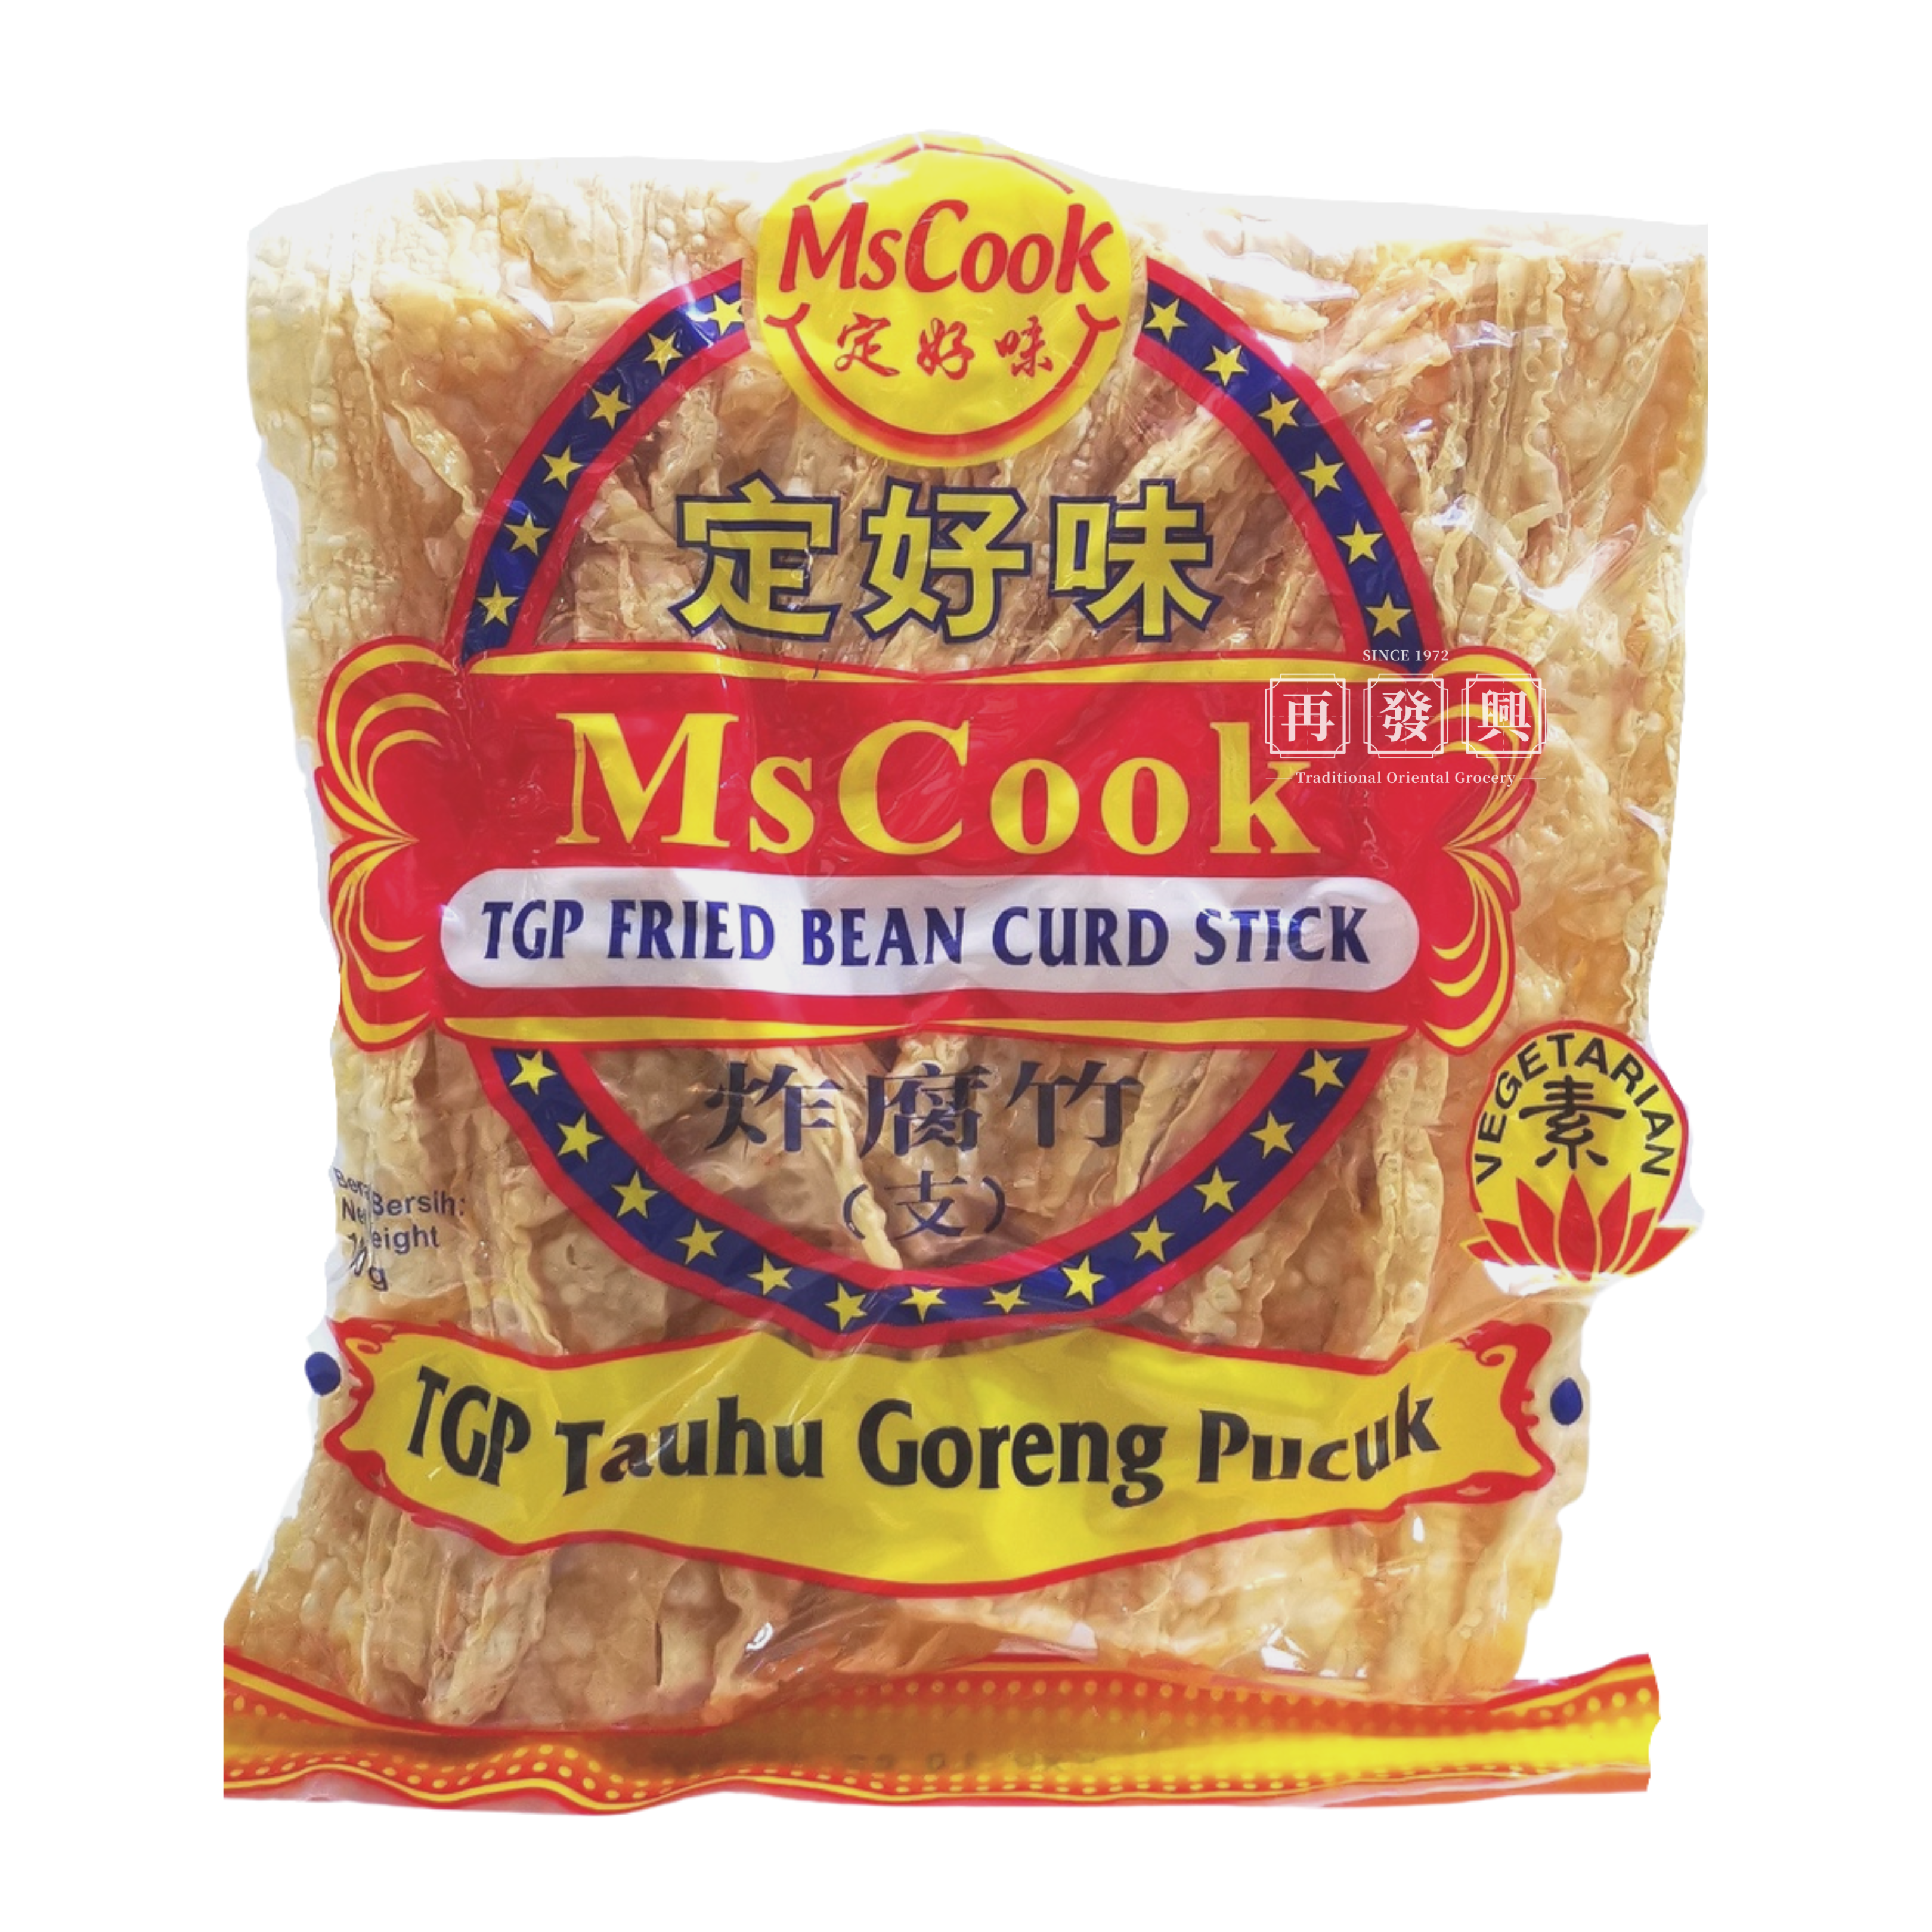 MsCook TGP Fried Bean Curd Stick / Fu Chuk 顶好炸腐竹支 100g